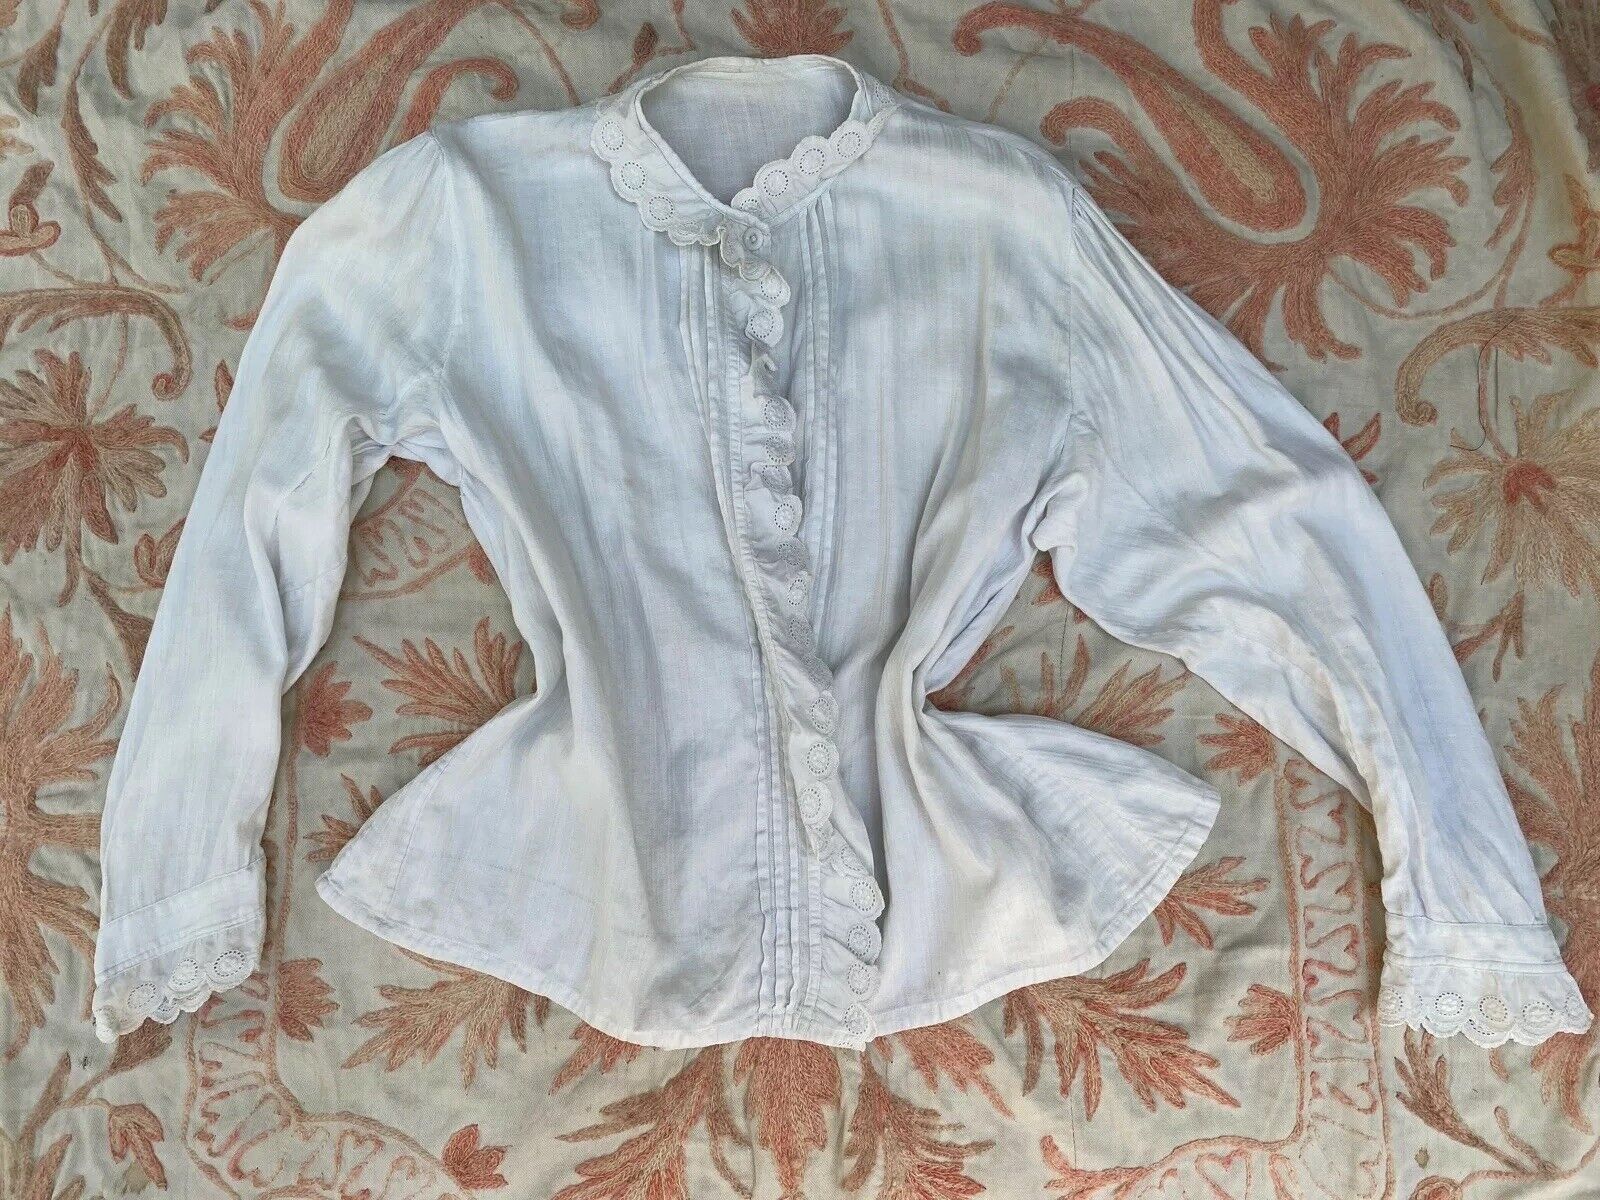 Antique Edwardian White Cotton Blouse Ruffles Lace Embroideey Top Bodice Vintage Popularna wyprzedaż